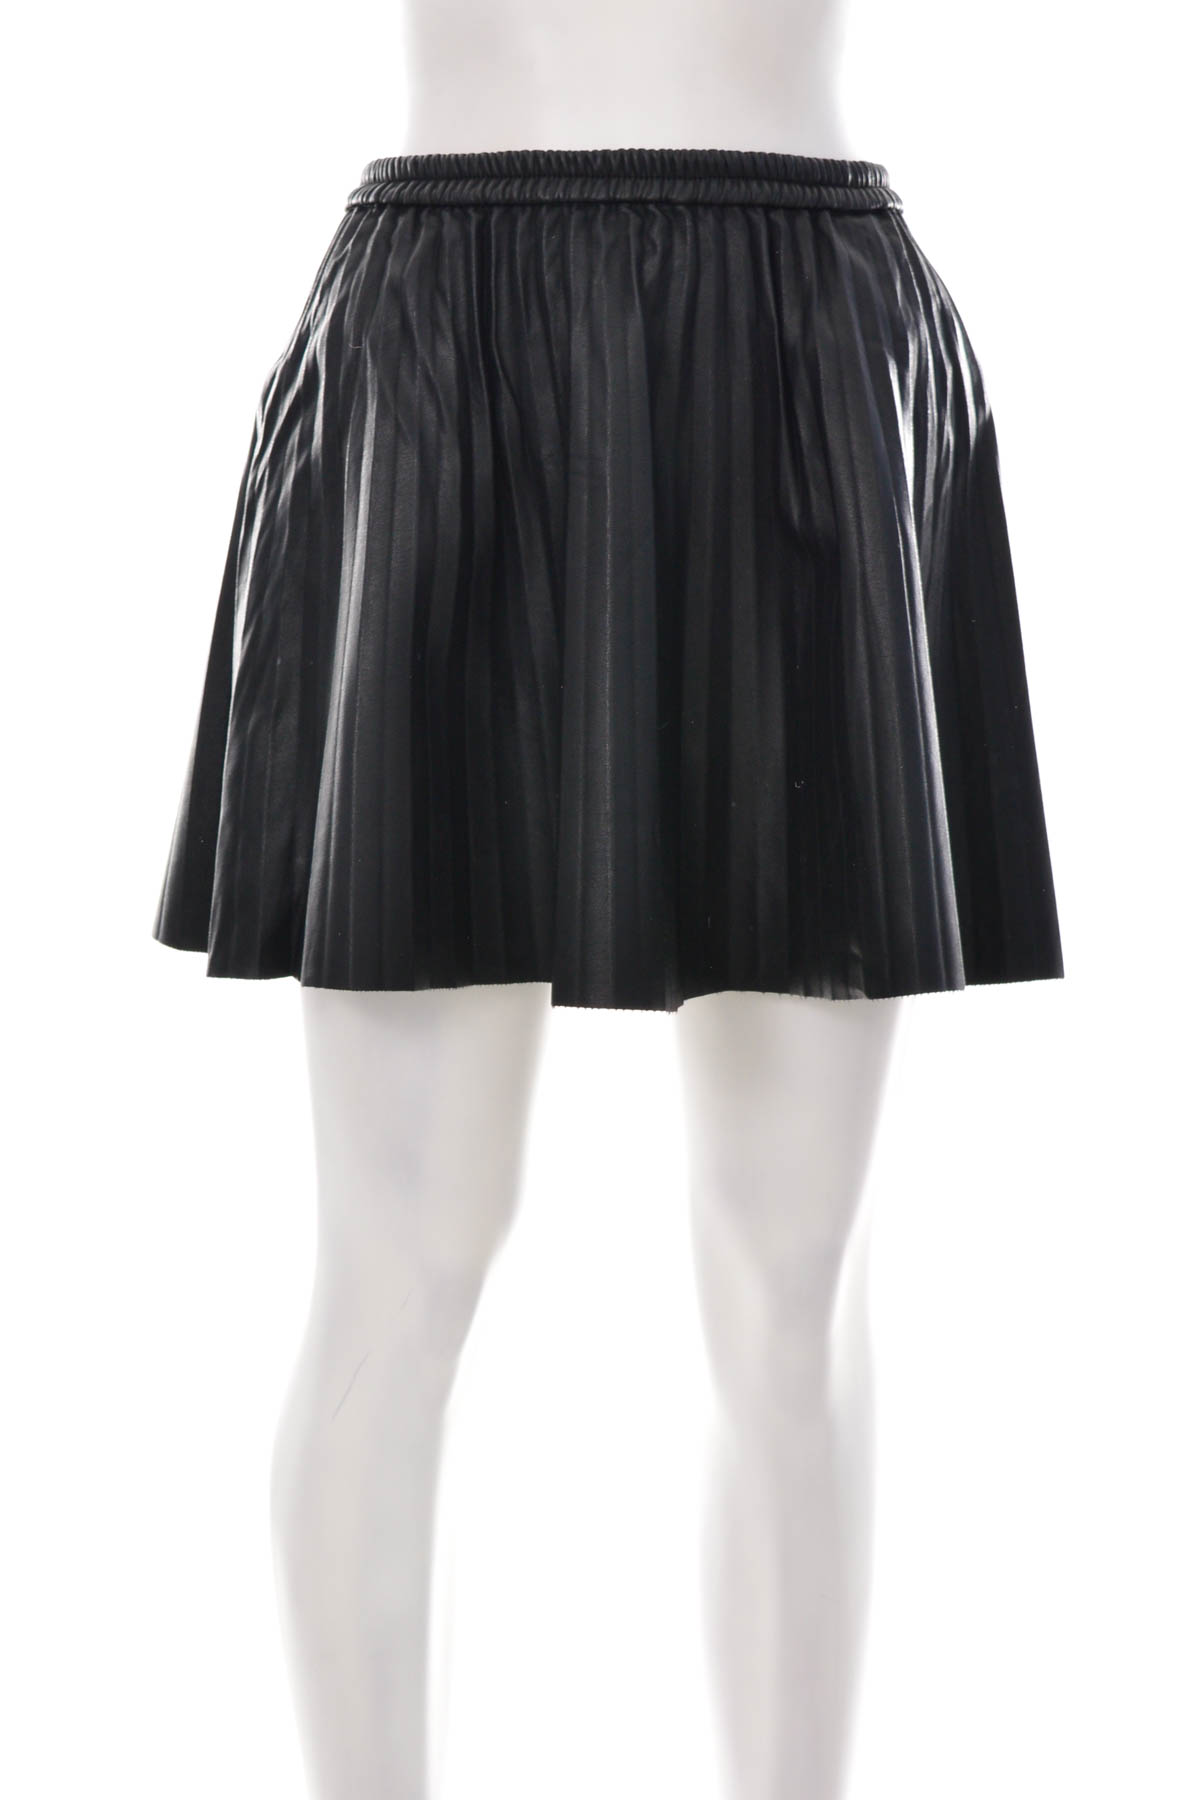 Leather skirt - Groggy by jbc - 0